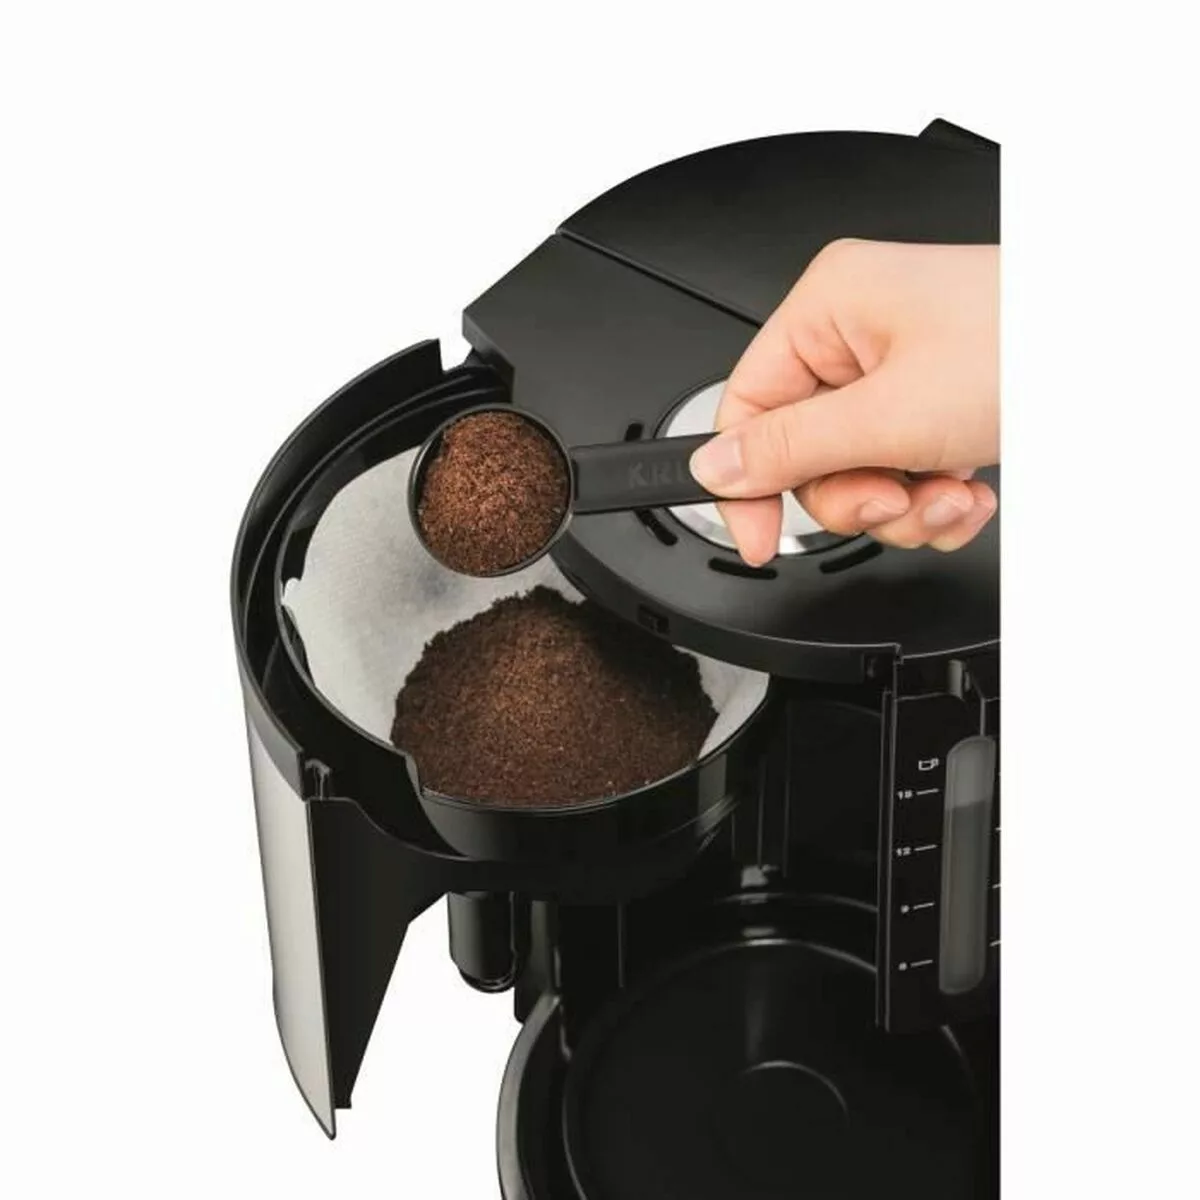 Filterkaffeemaschine Krups Proaroma Plus 1,5 L 1100 W günstig online kaufen